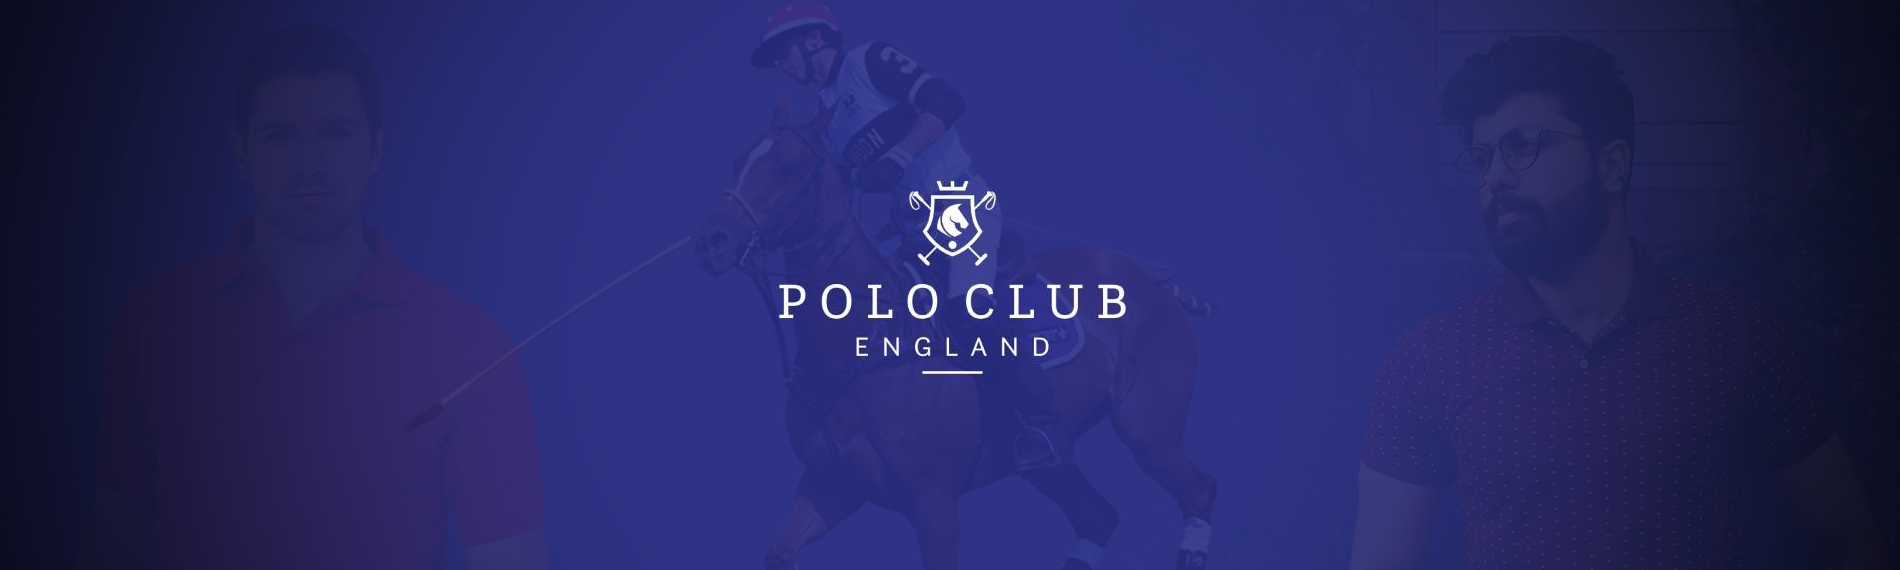 banner da empresa Polo Club Natal